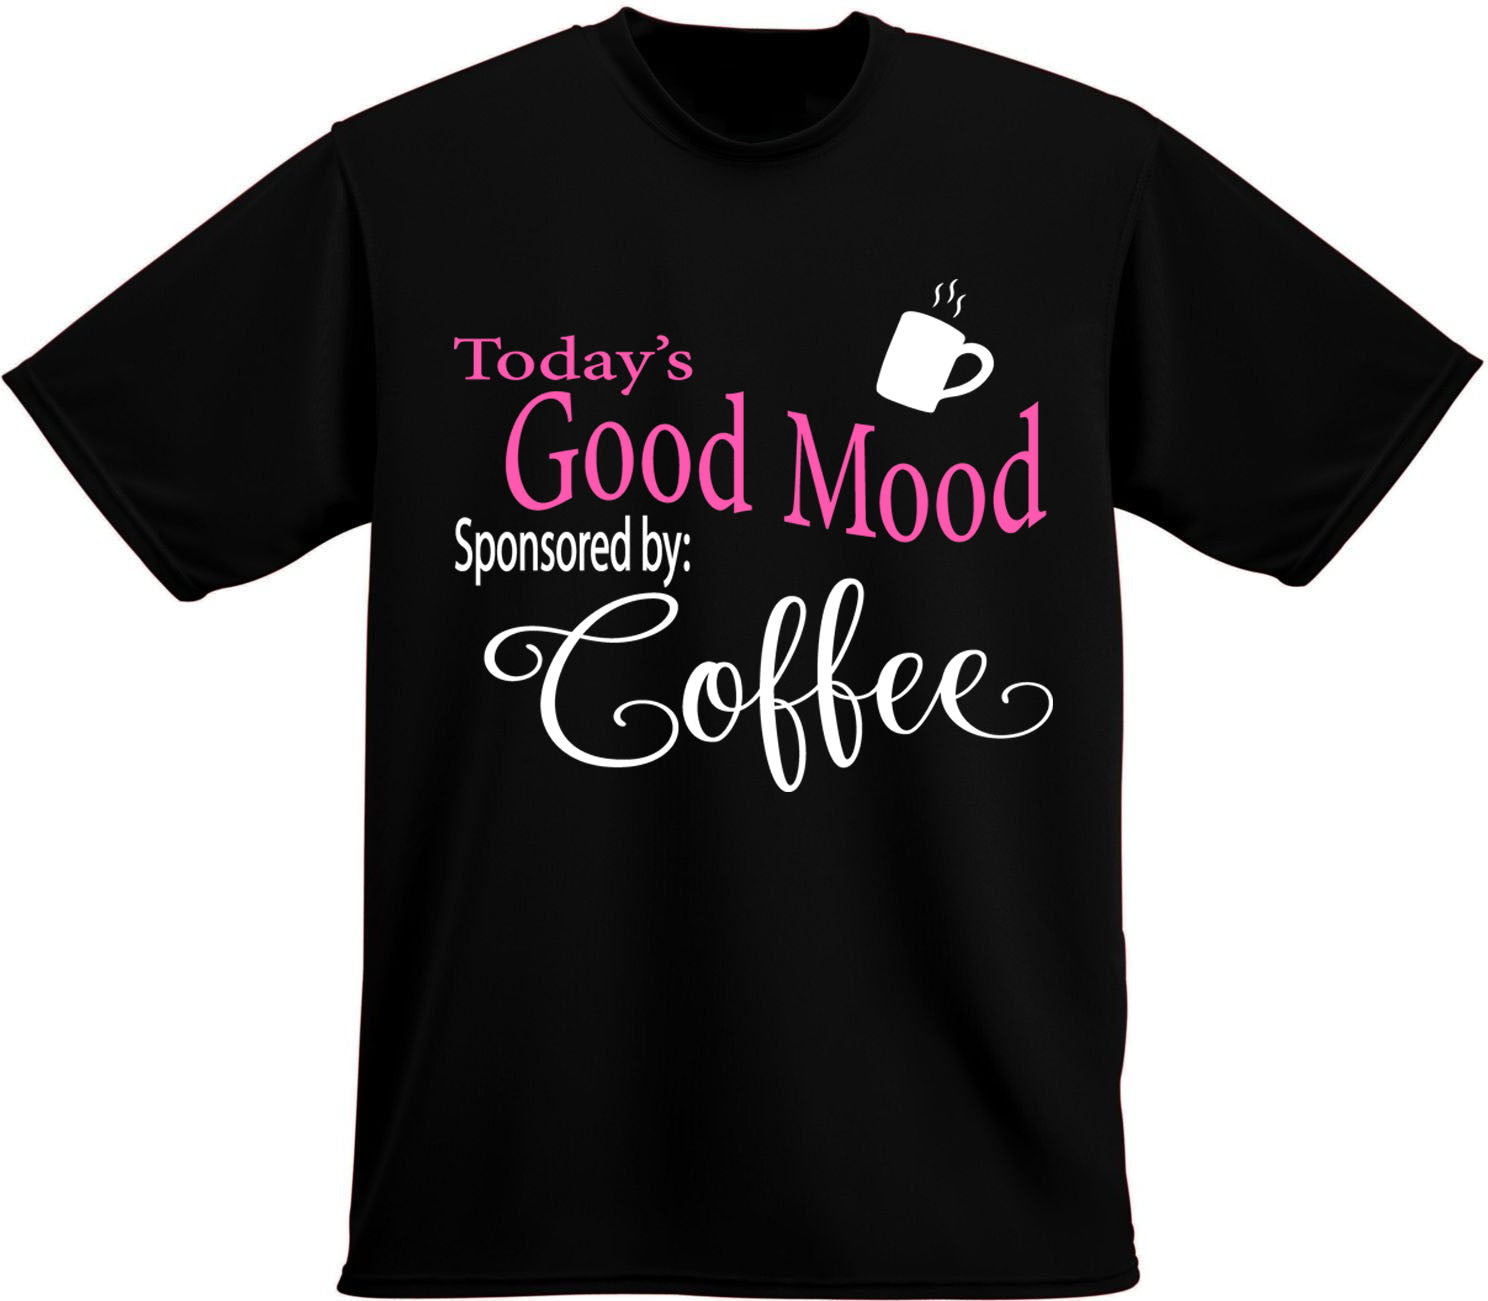 Good mood sponsored by Coffee, Coffee t-shirt